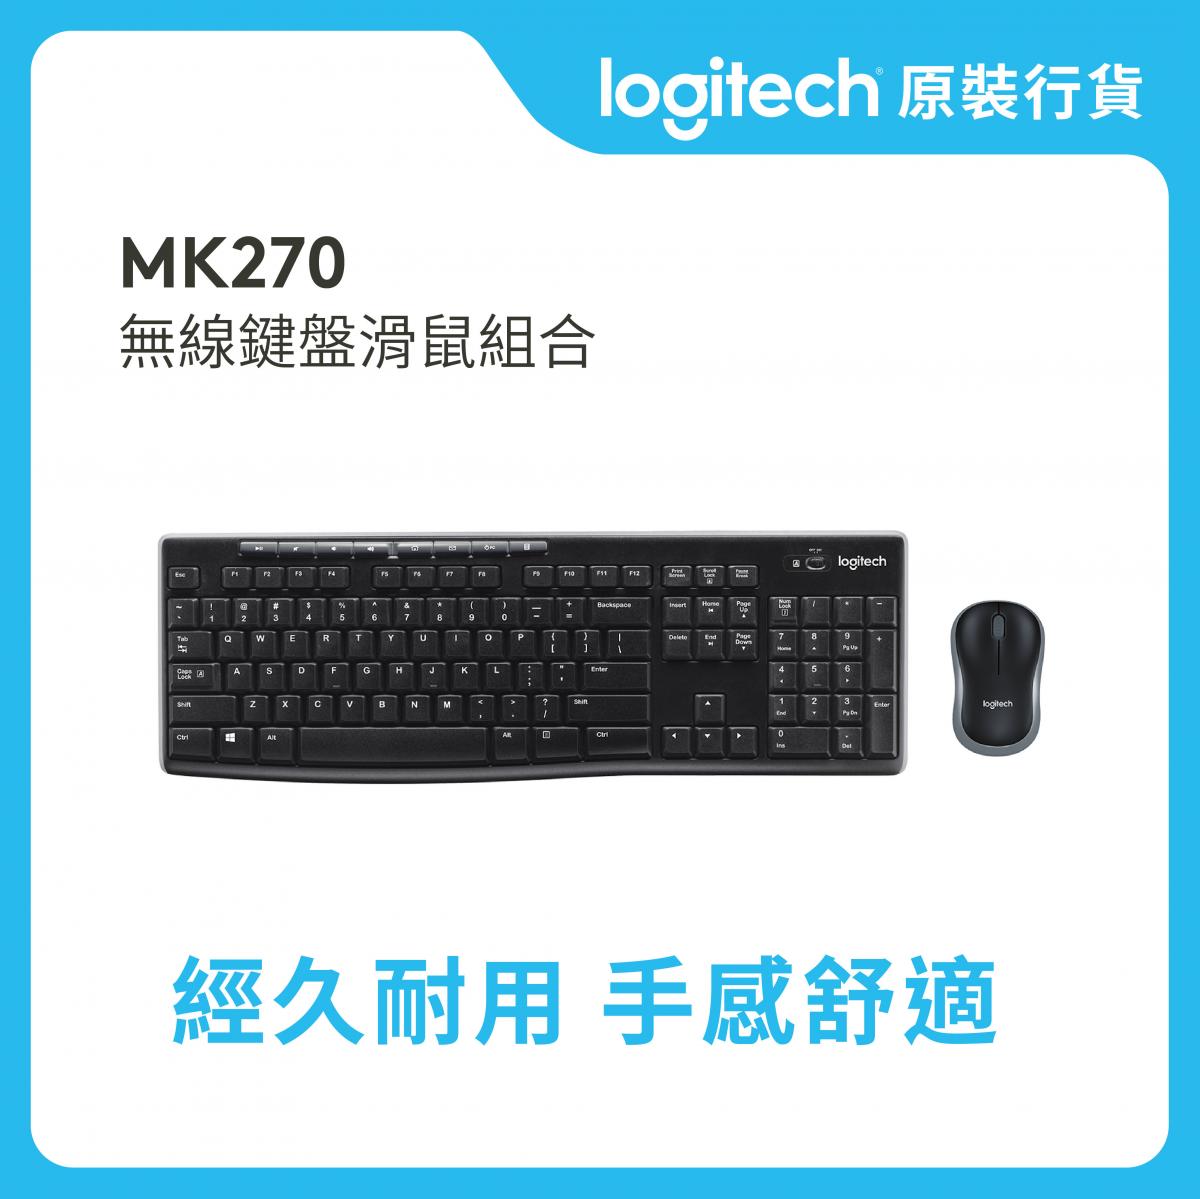 MK270R - 中文 - 可靠無線鍵盤與滑鼠組合 (920-006312)